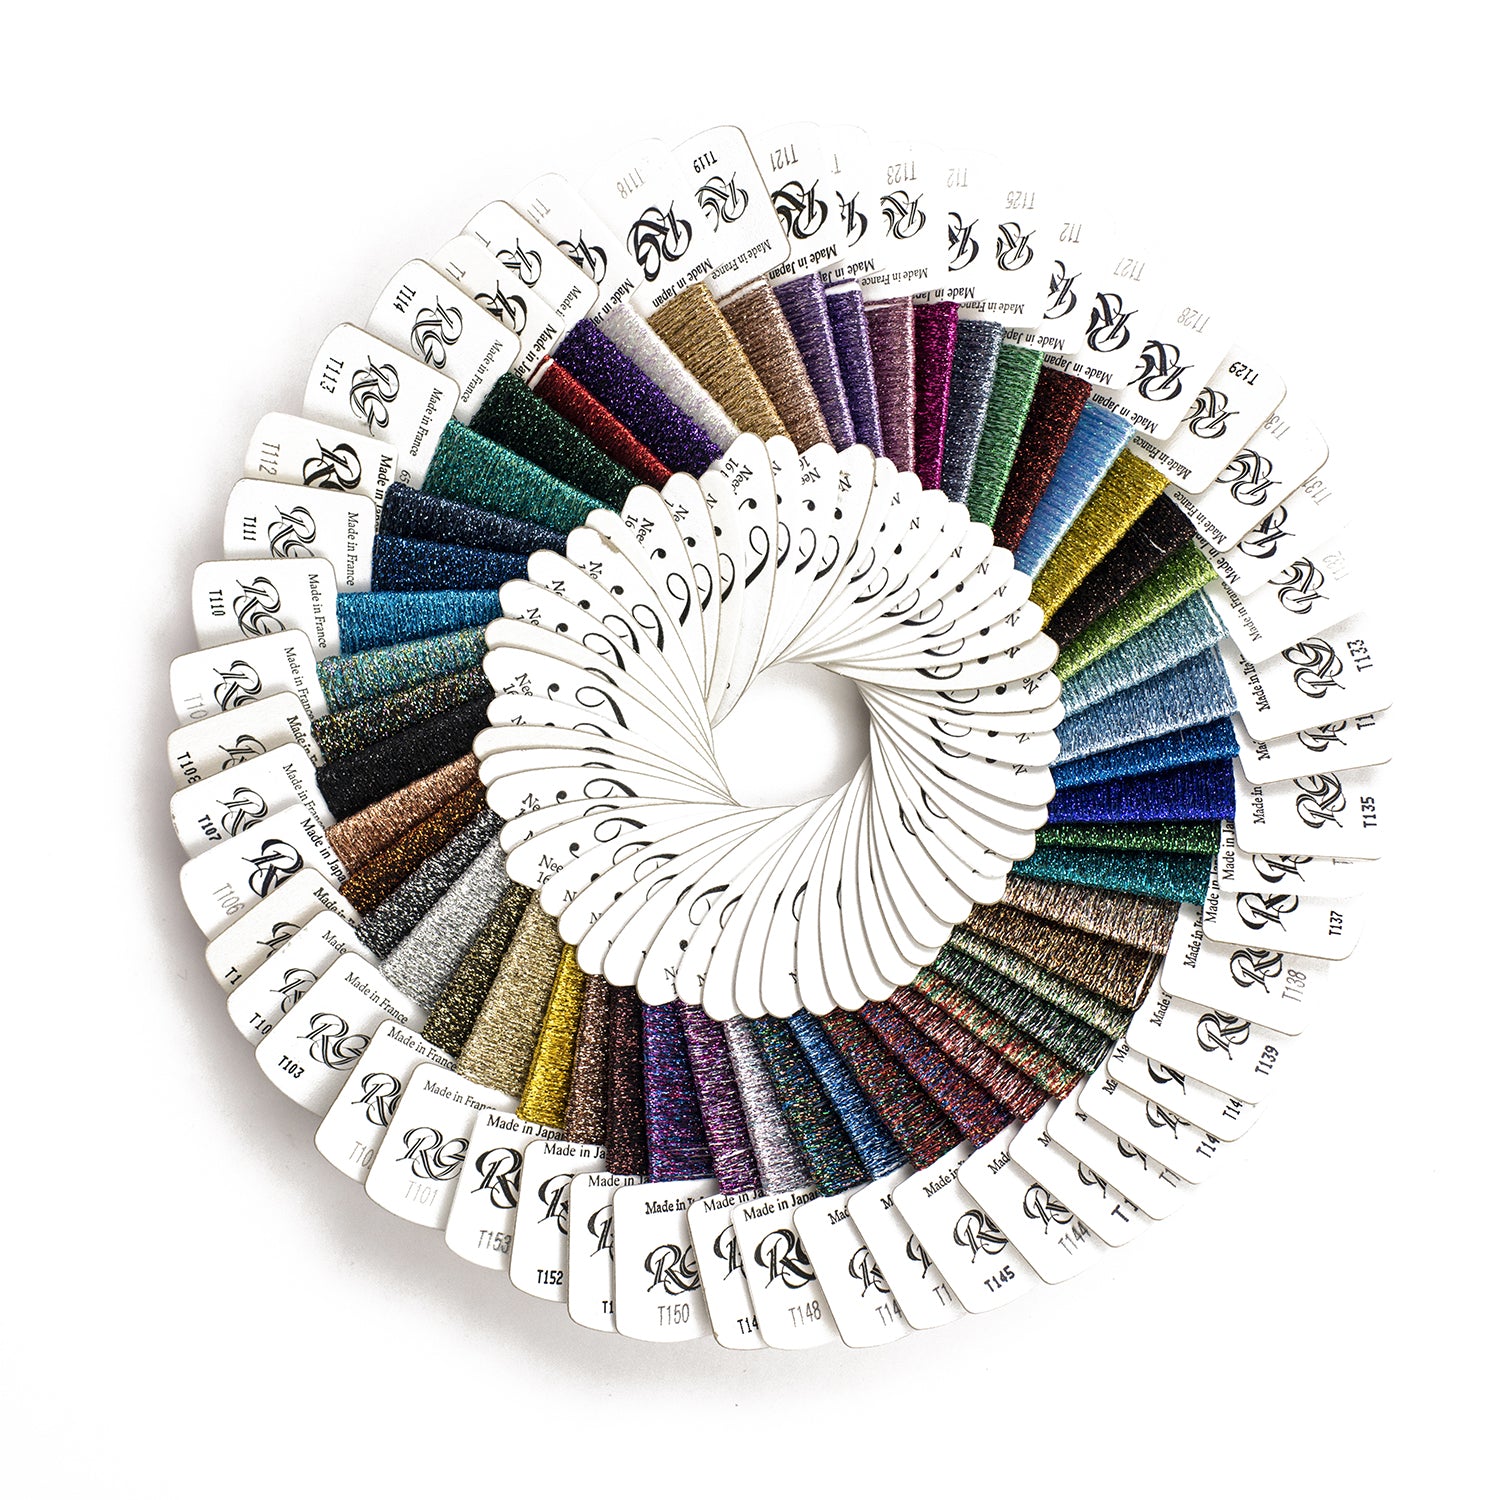 Rainbow Gallery Tiara cross stitch thread